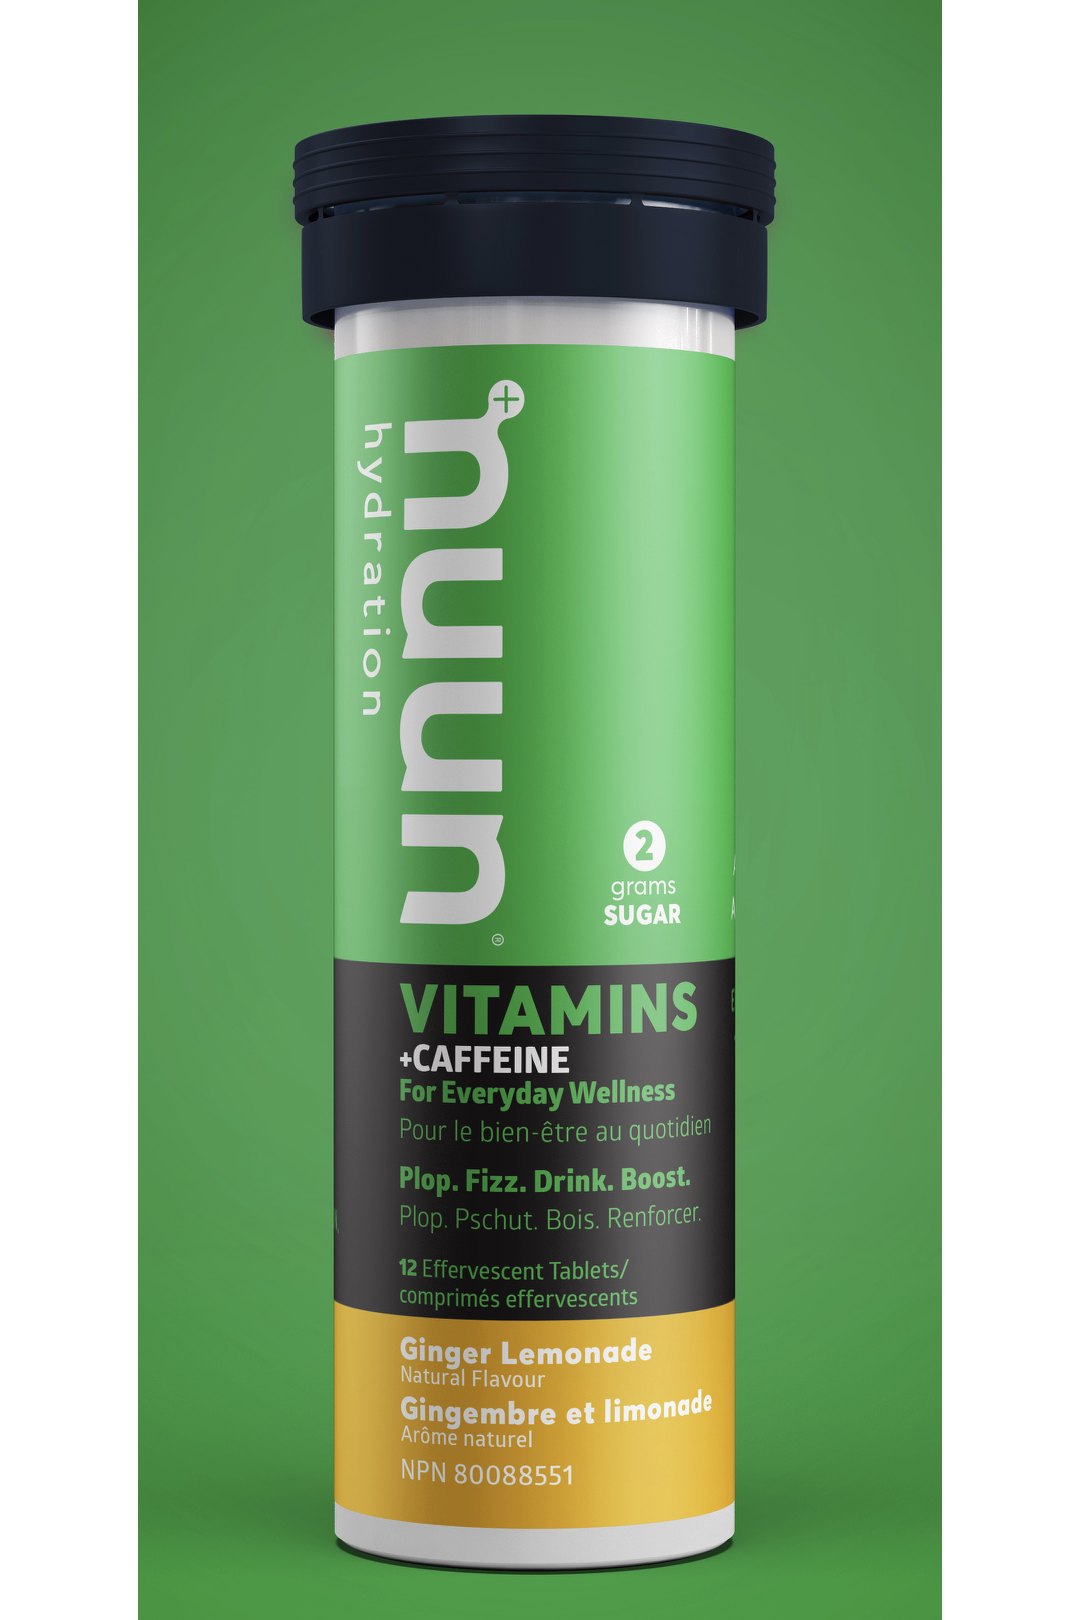 Nuun Vitamins with Caffeine Ginger Lemonade